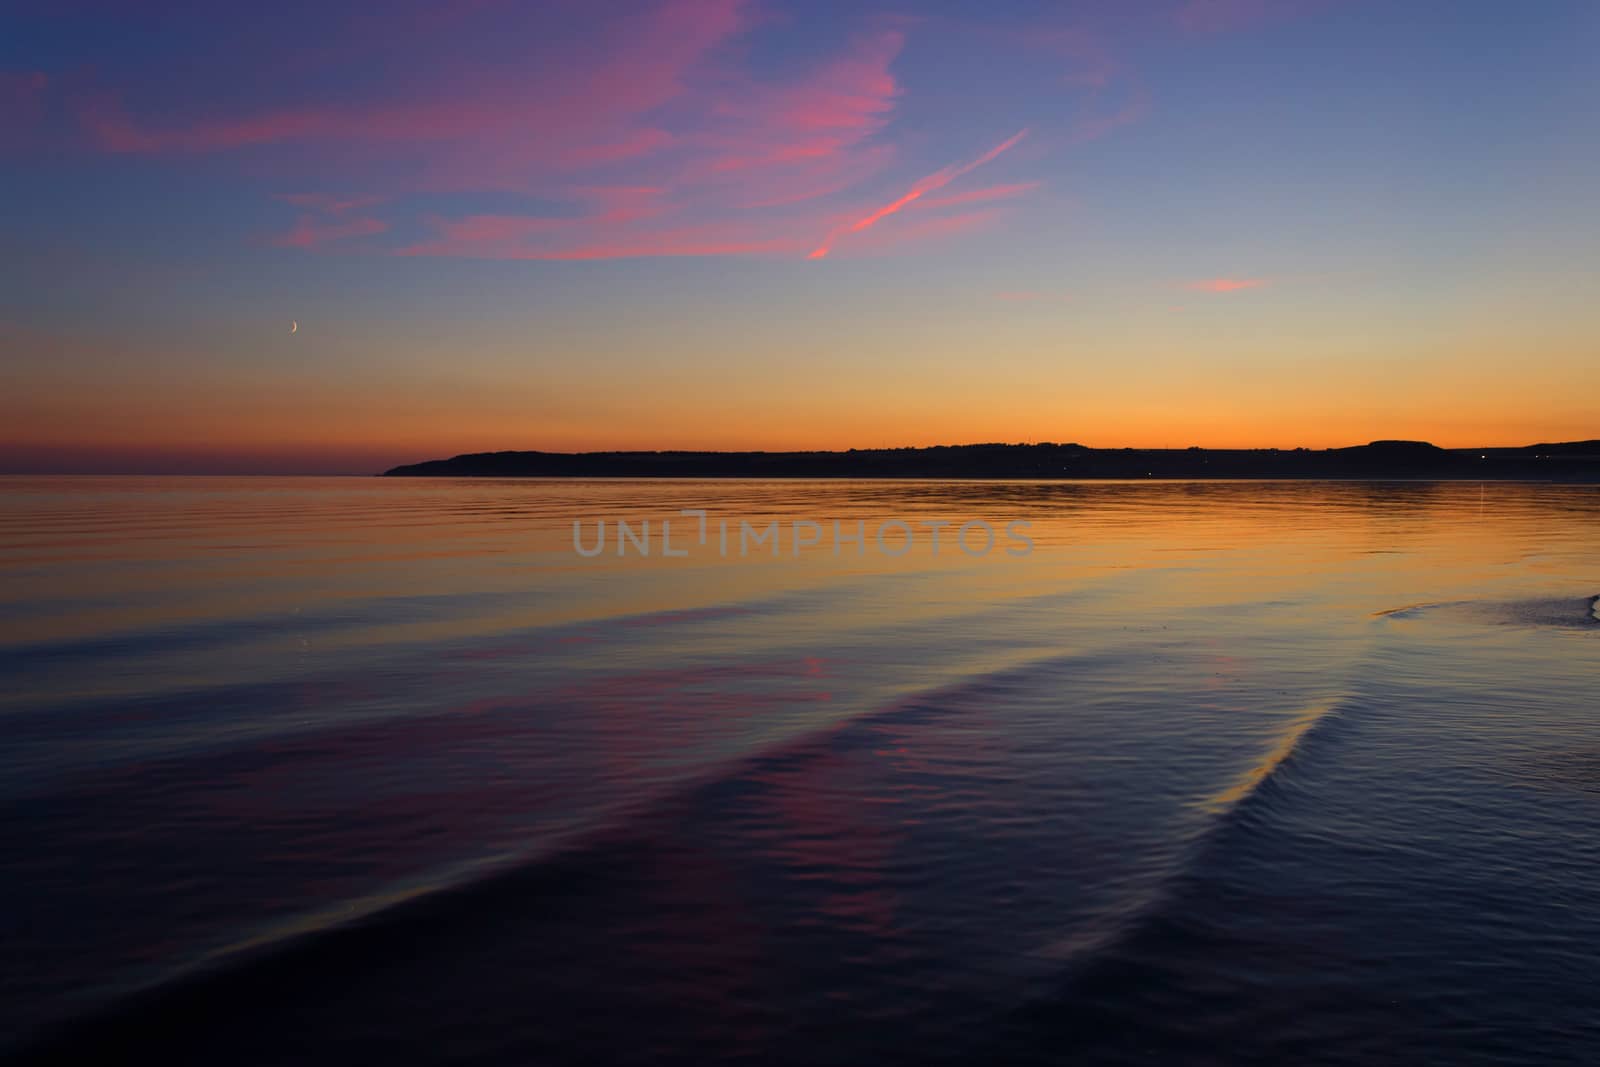 Scenic sunset over ocean beach by liwei12